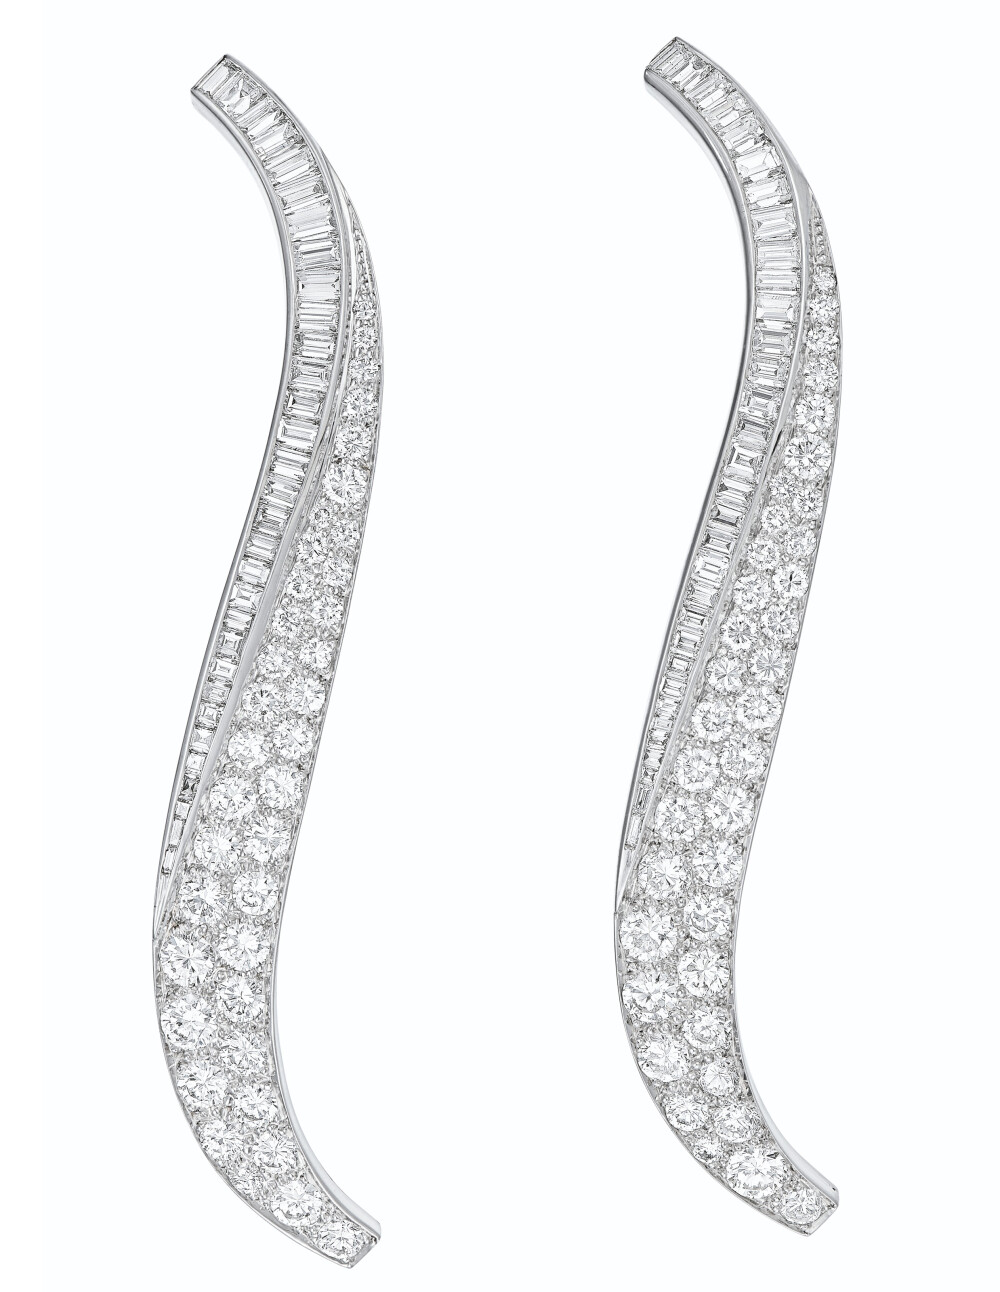  Van Cleef & Arpels 梵克雅宝 钻石胸针 镶嵌圆形切割和长方形切割钻石，每个约7.5厘米。成交价3万美元 FLAME 火焰